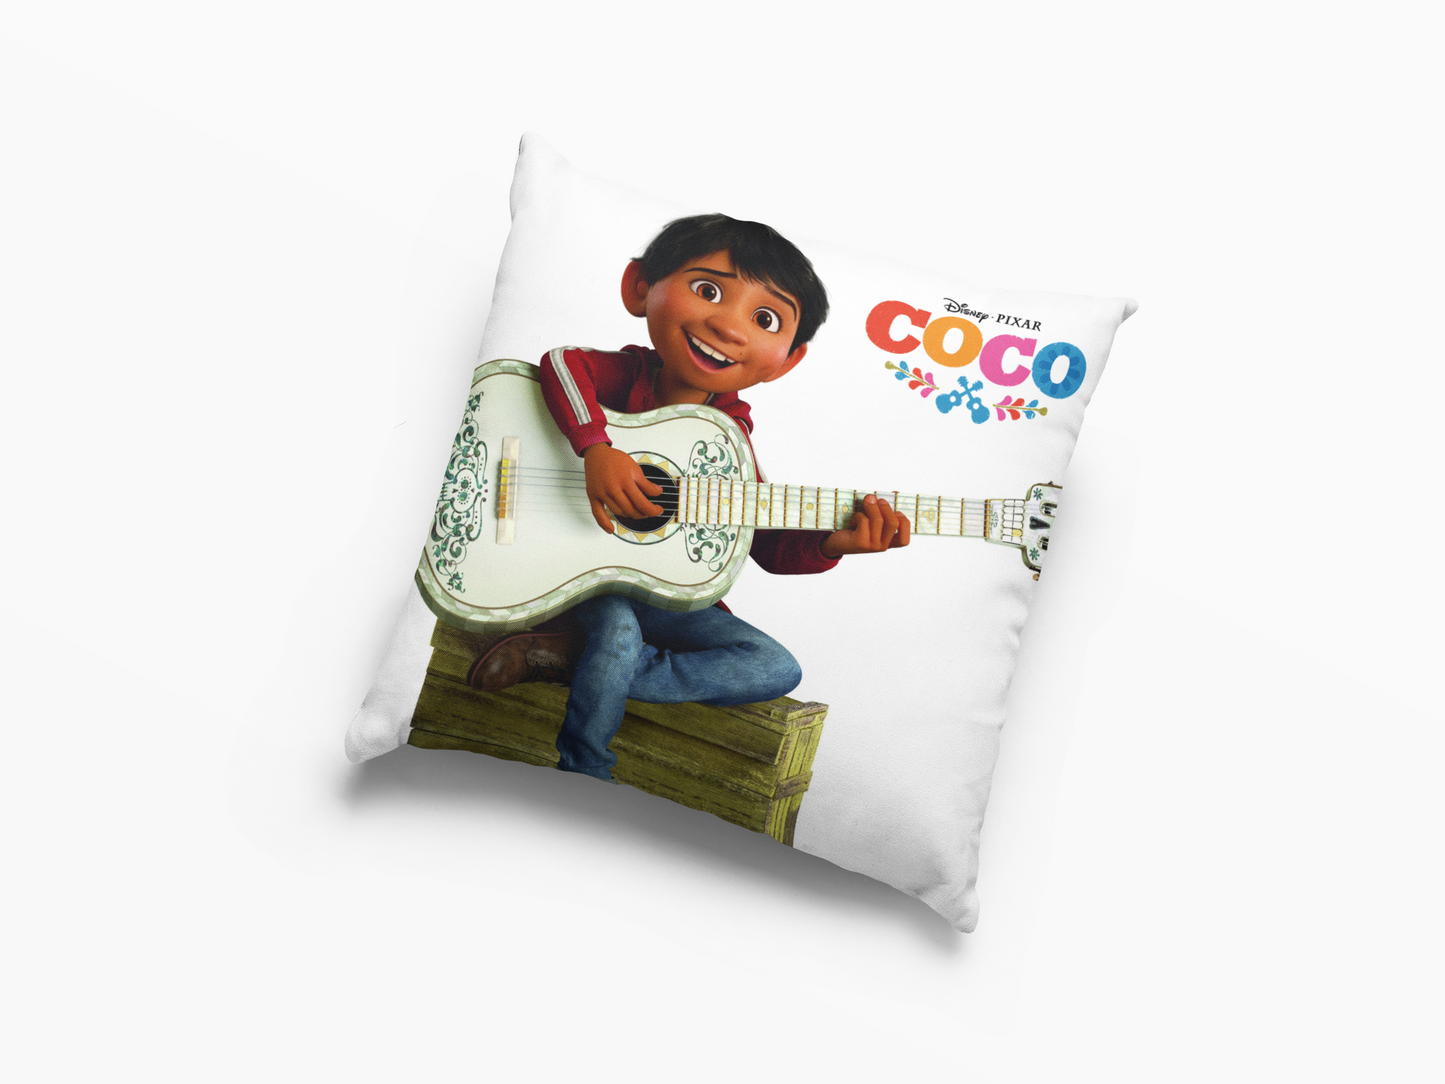 Disney Pixar Coco Miguel Cushion Case / Pillow Case